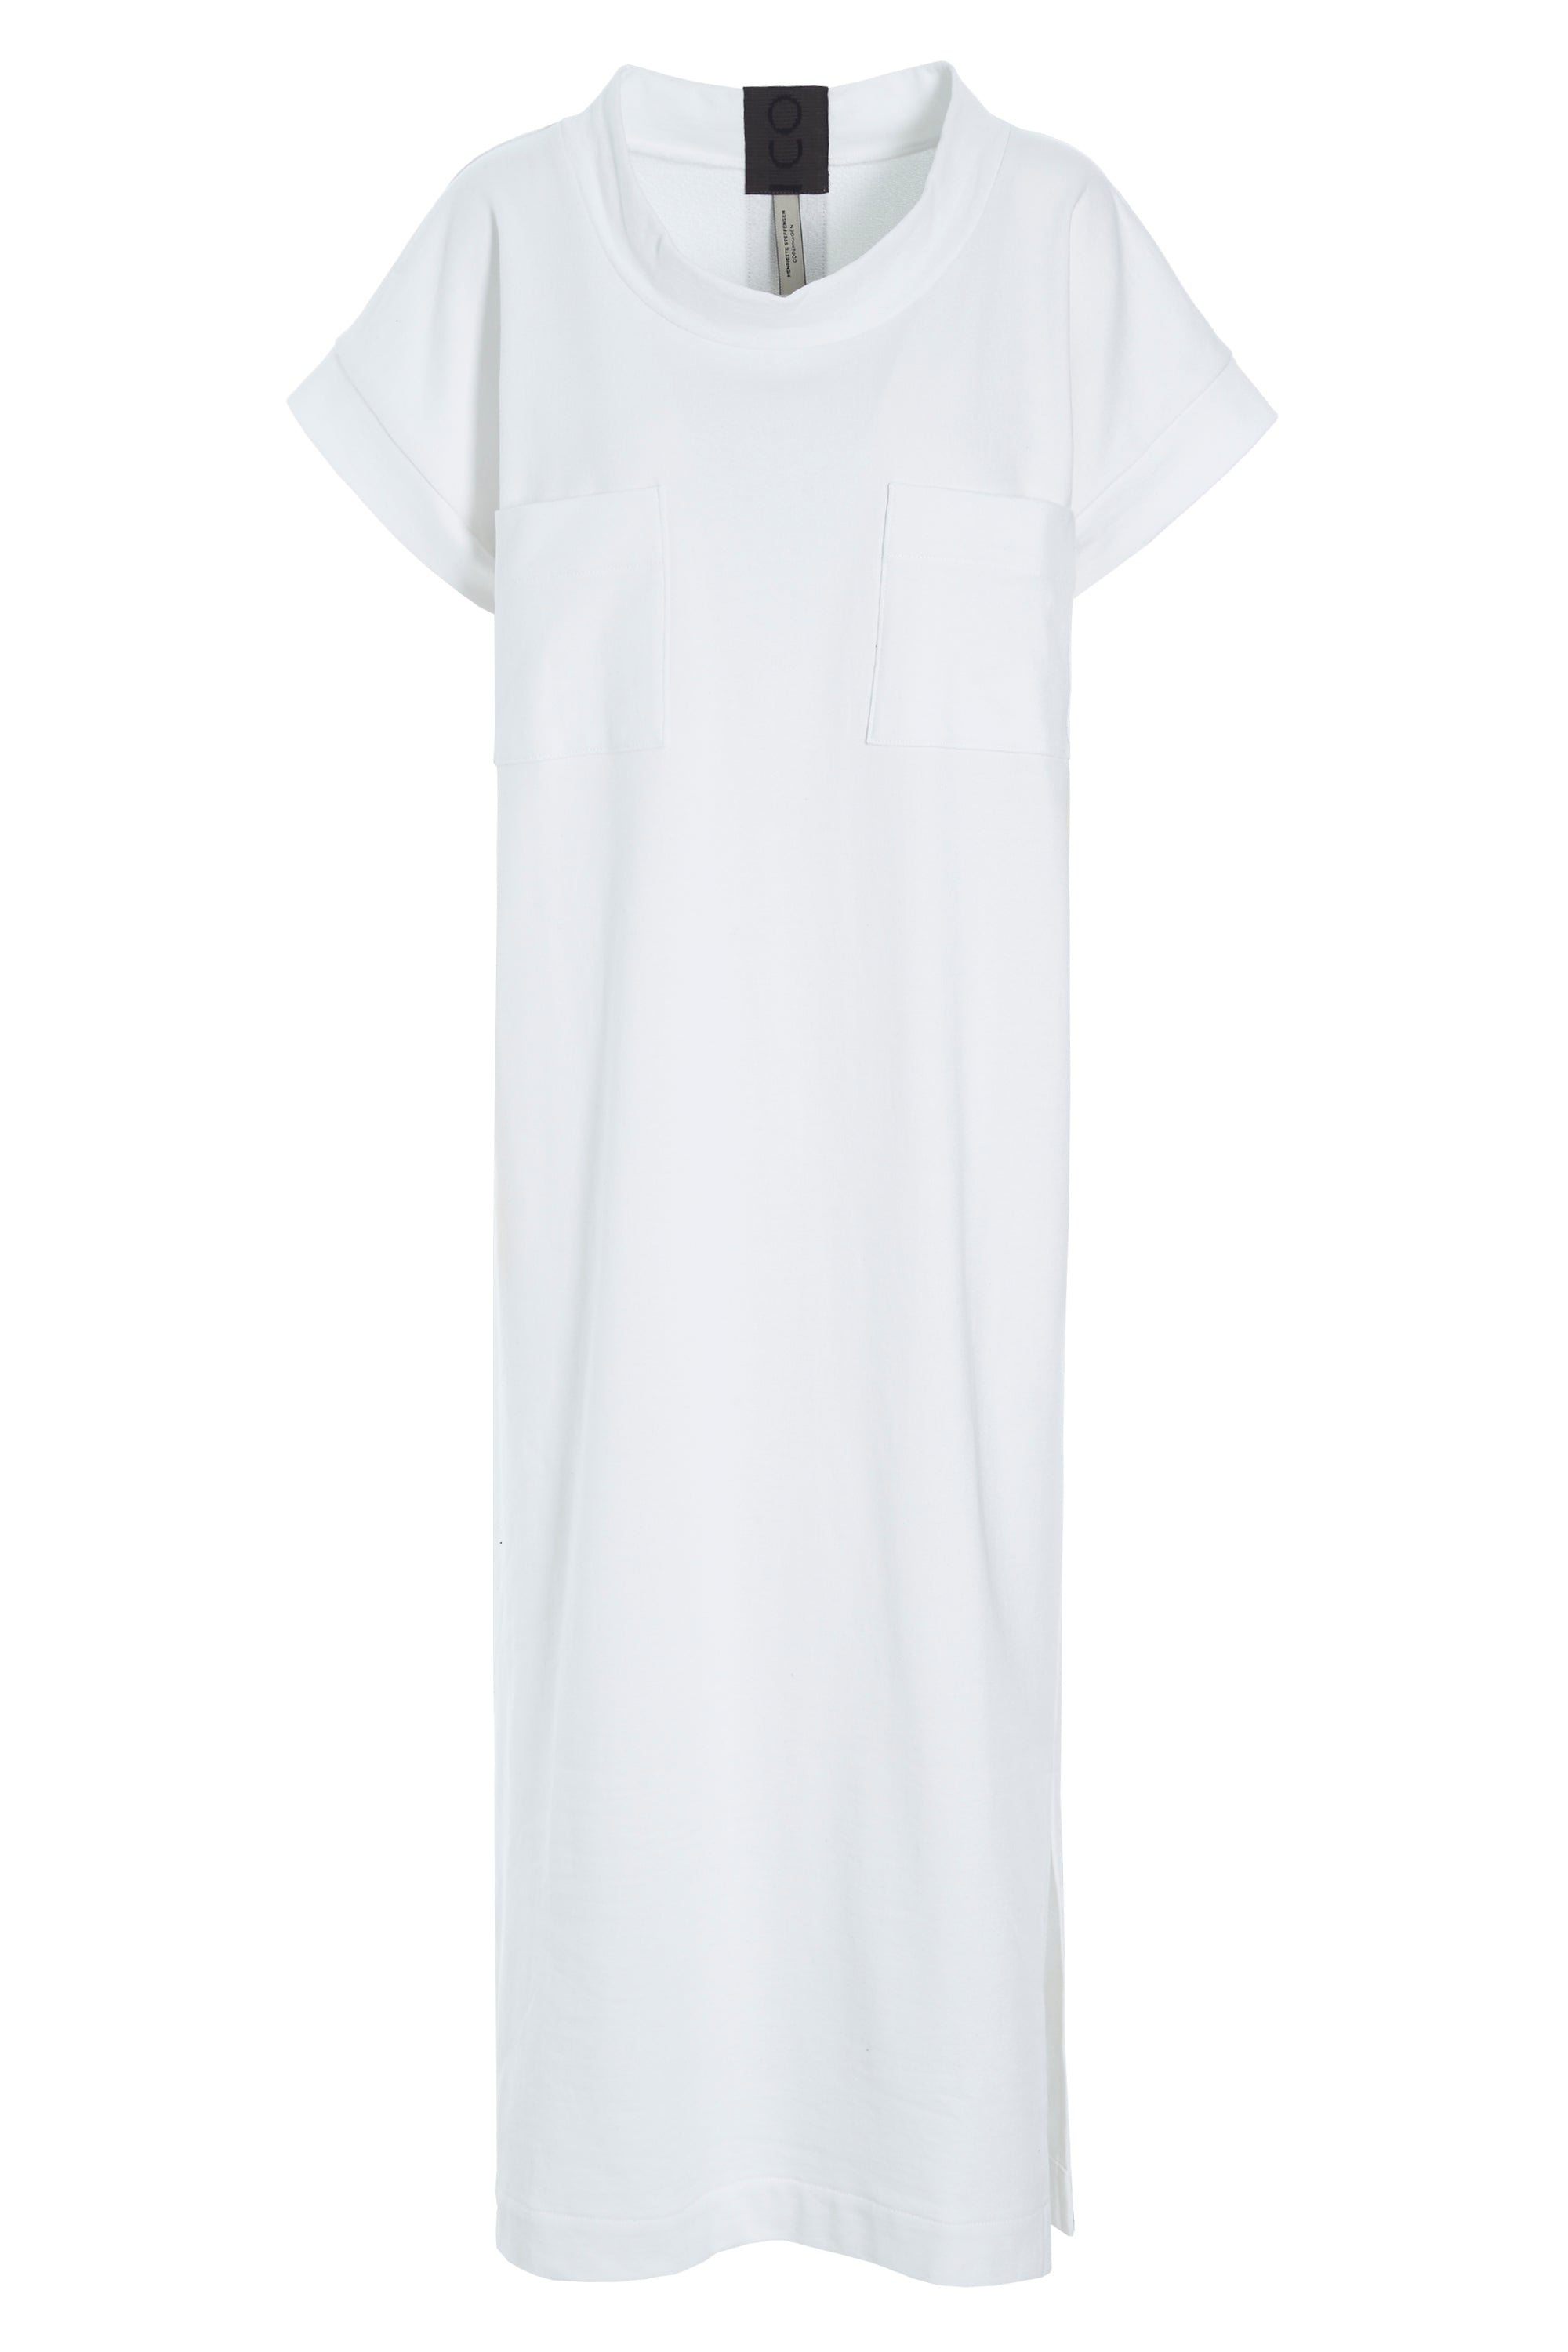 HENRIETTE STEFFENSEN COPENHAGEN LANG KJOLE - 73402 DRESS cotton WHITE 816